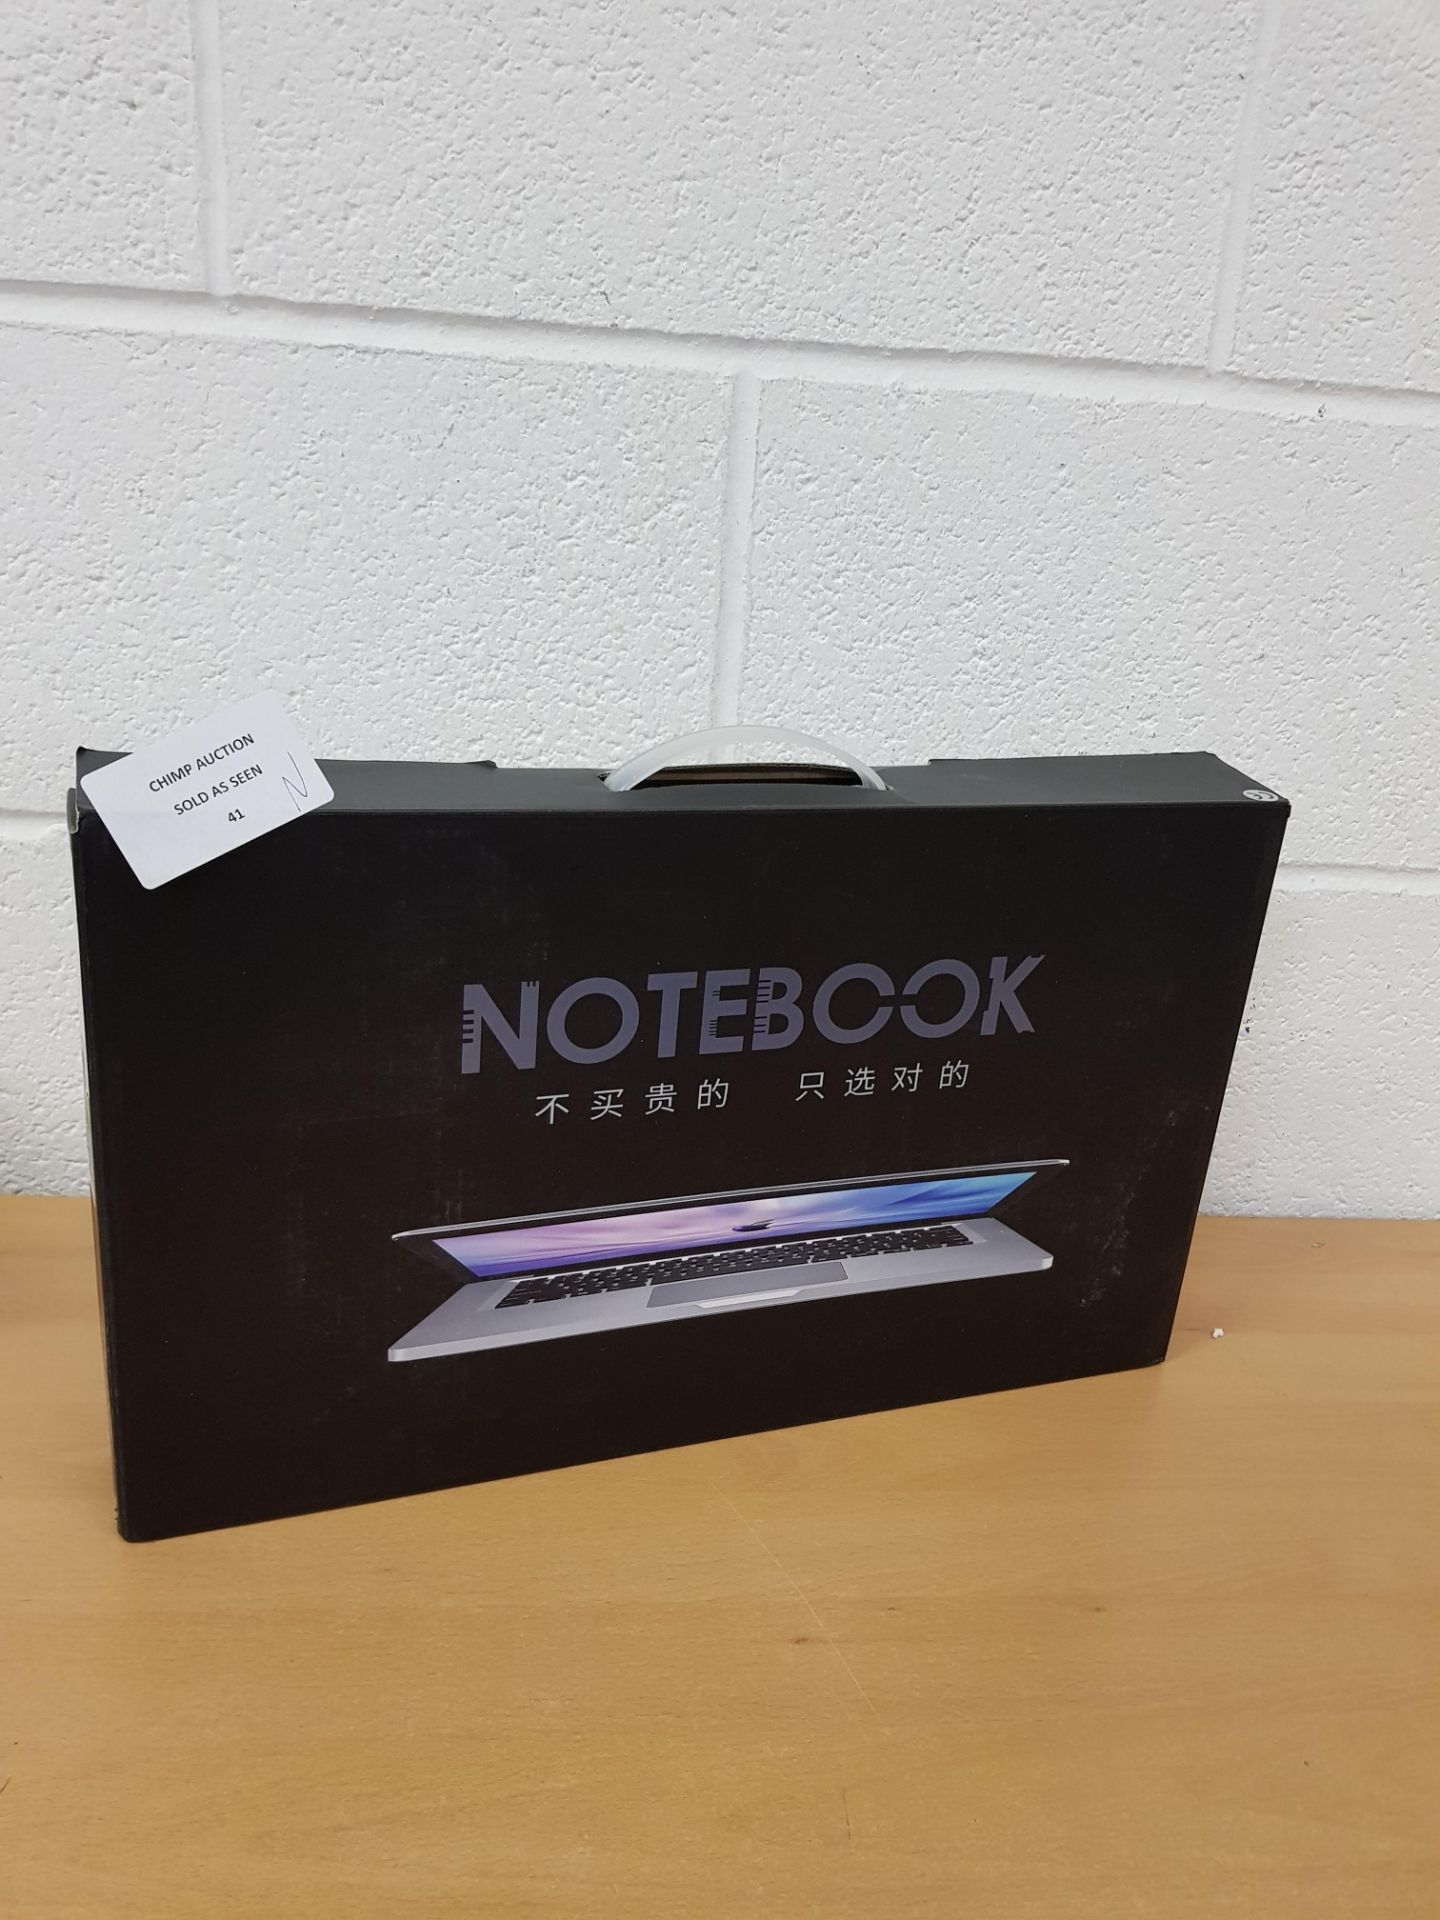 Brand new Excelvan Laptop X8 Pro NoteBook Intel J3455